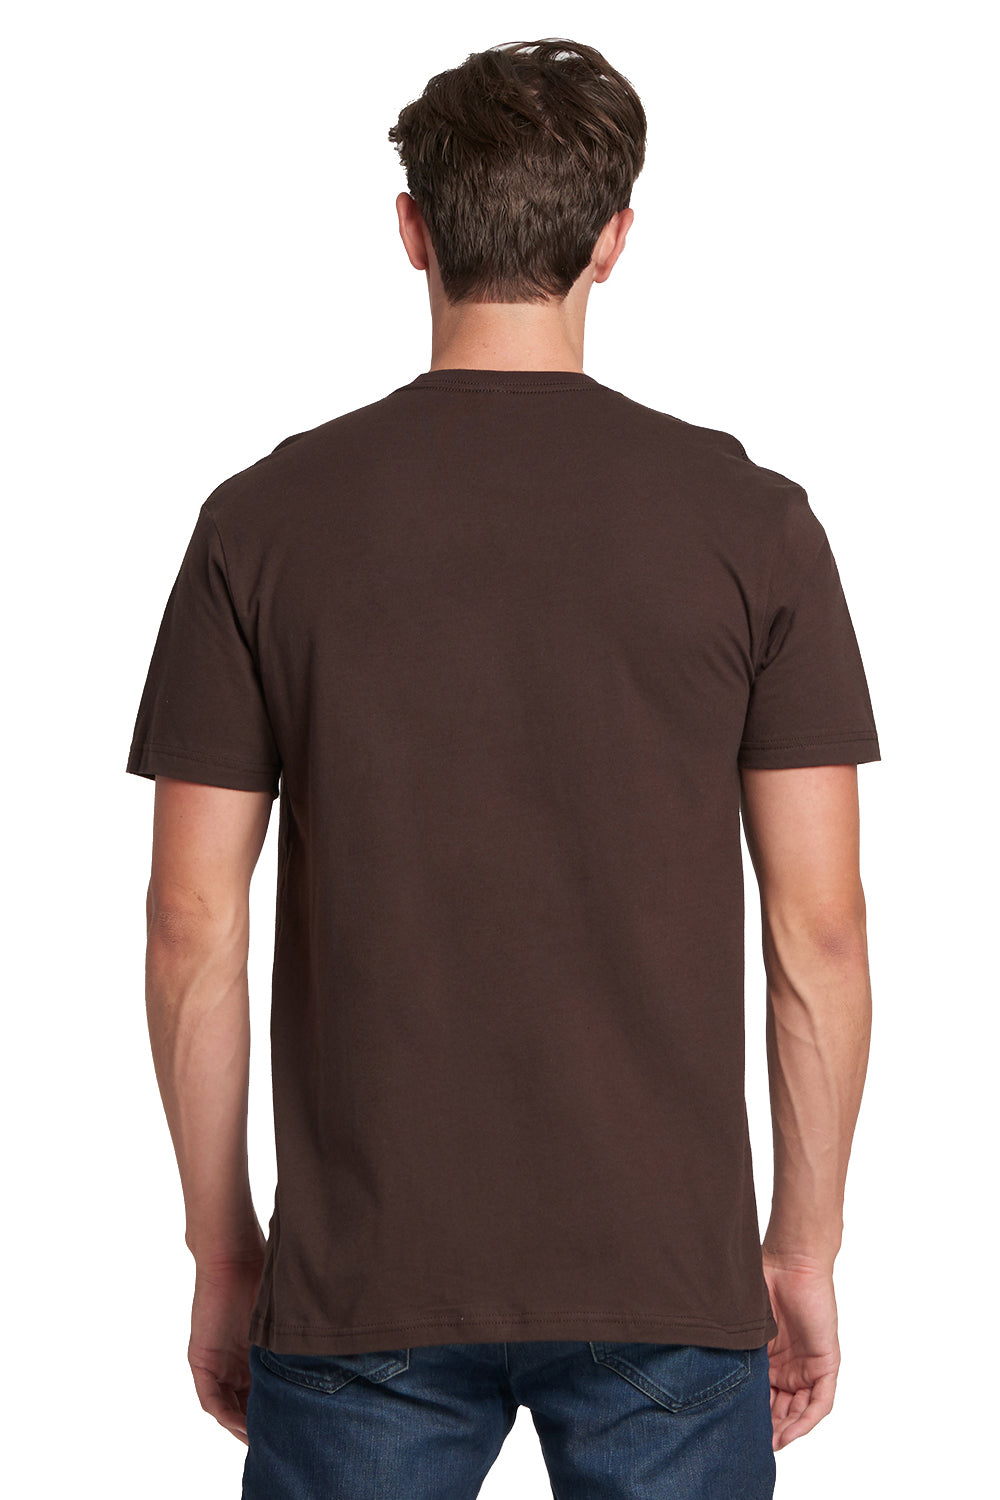 Next Level 3600 Mens Fine Jersey Short Sleeve Crewneck T-Shirt Chocolate Brown Back